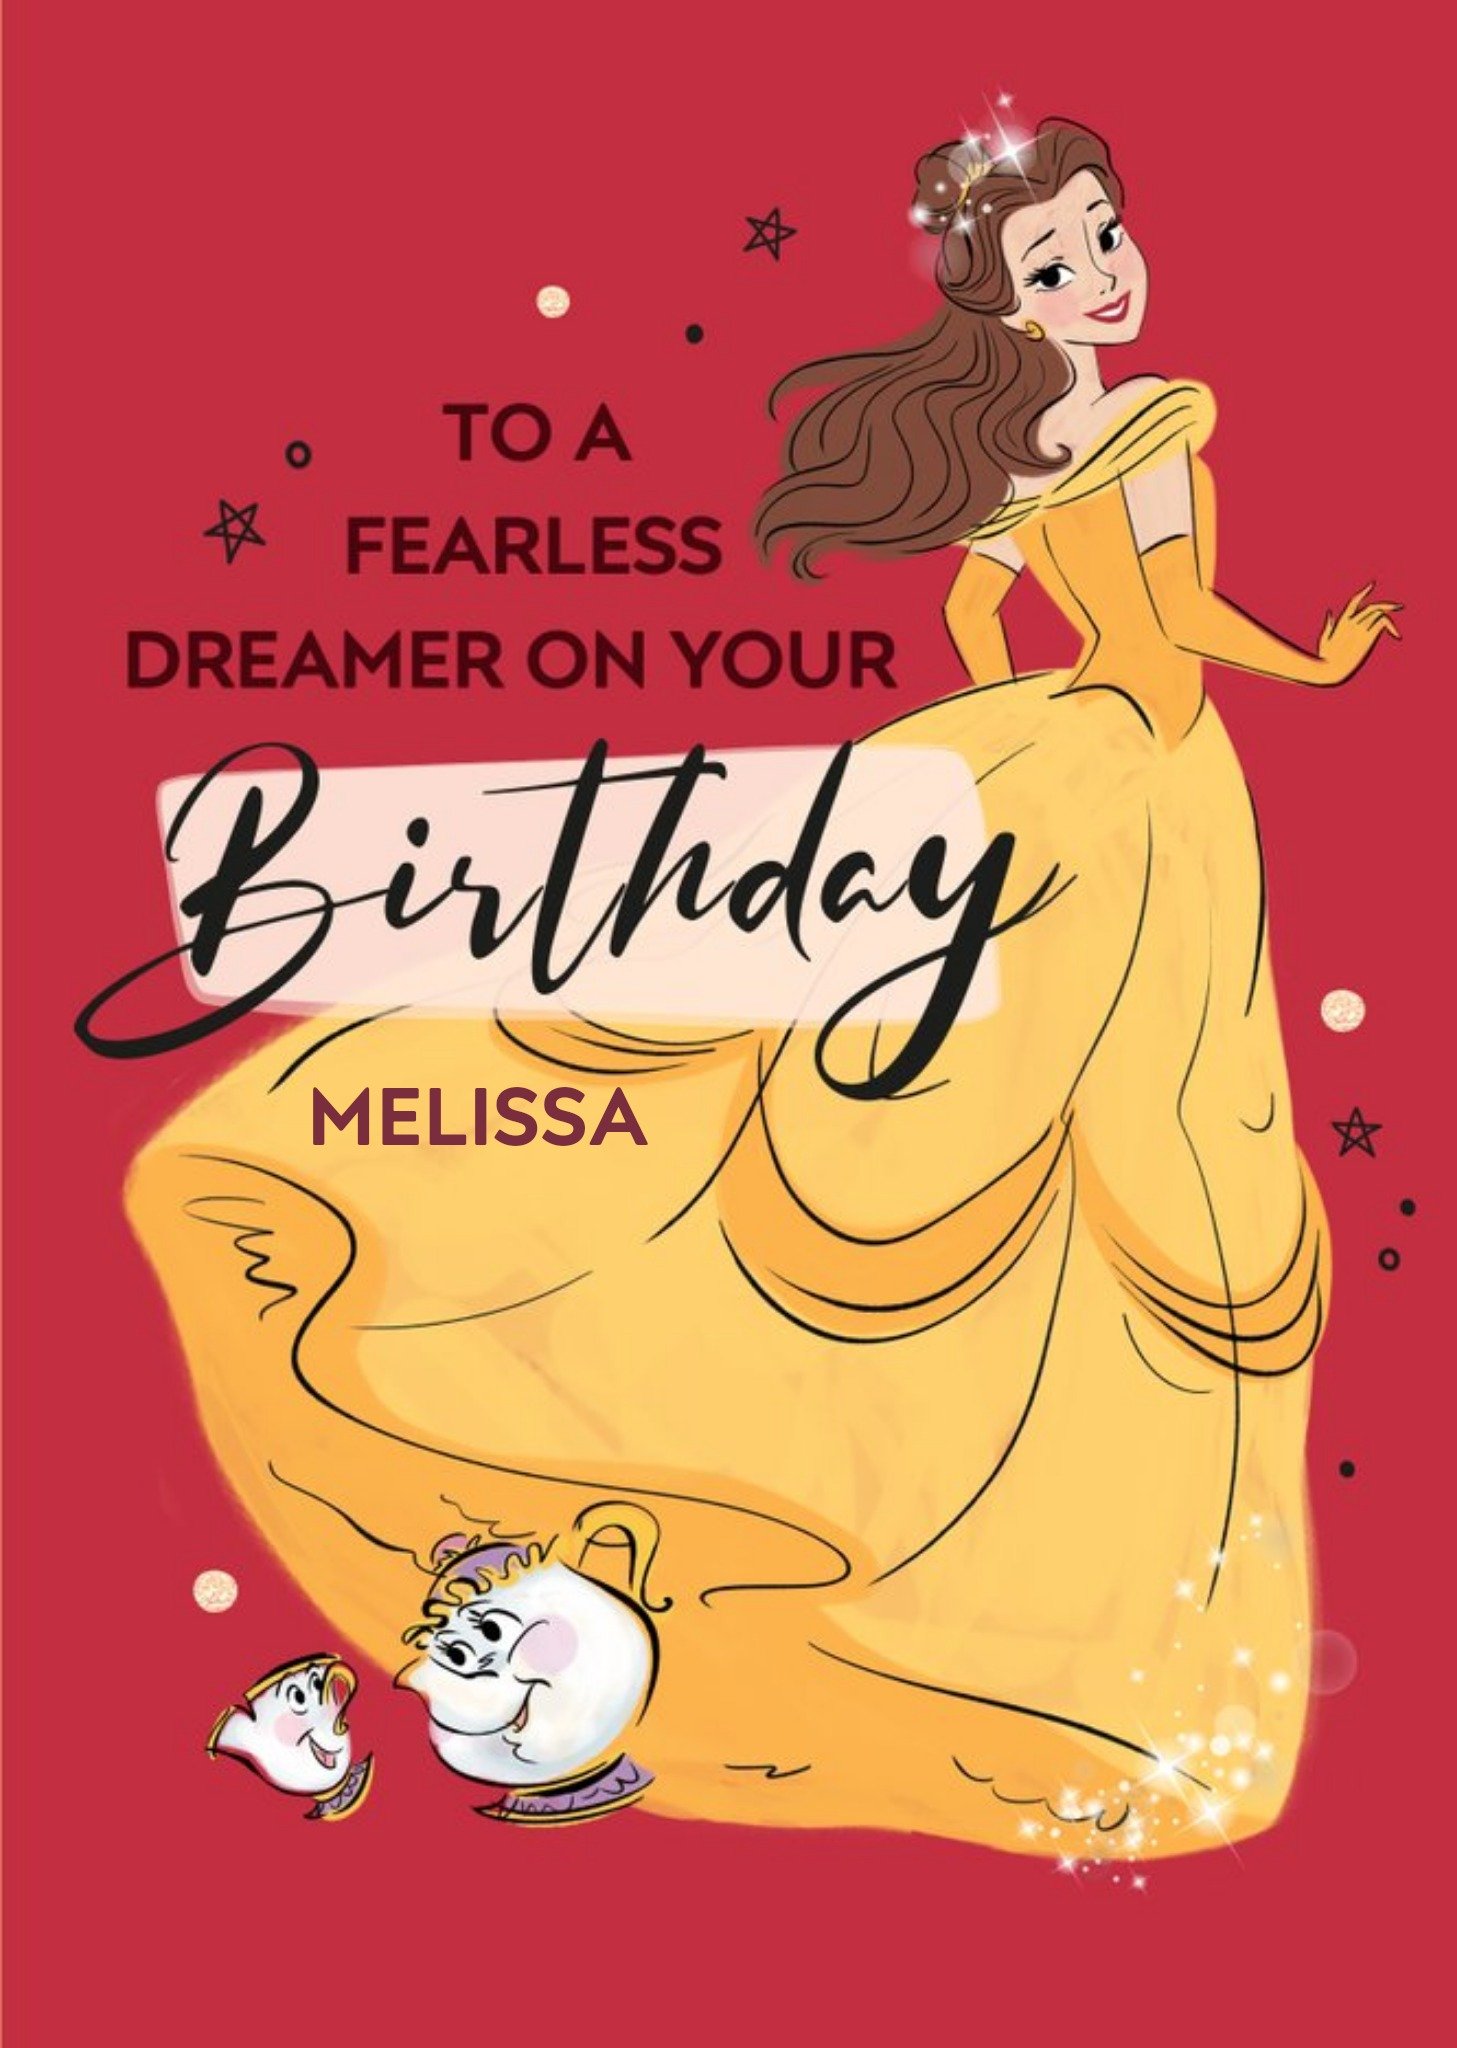 Disney Princesses Disney Princess Belle Fearless Dreamer Birthday Card, Large